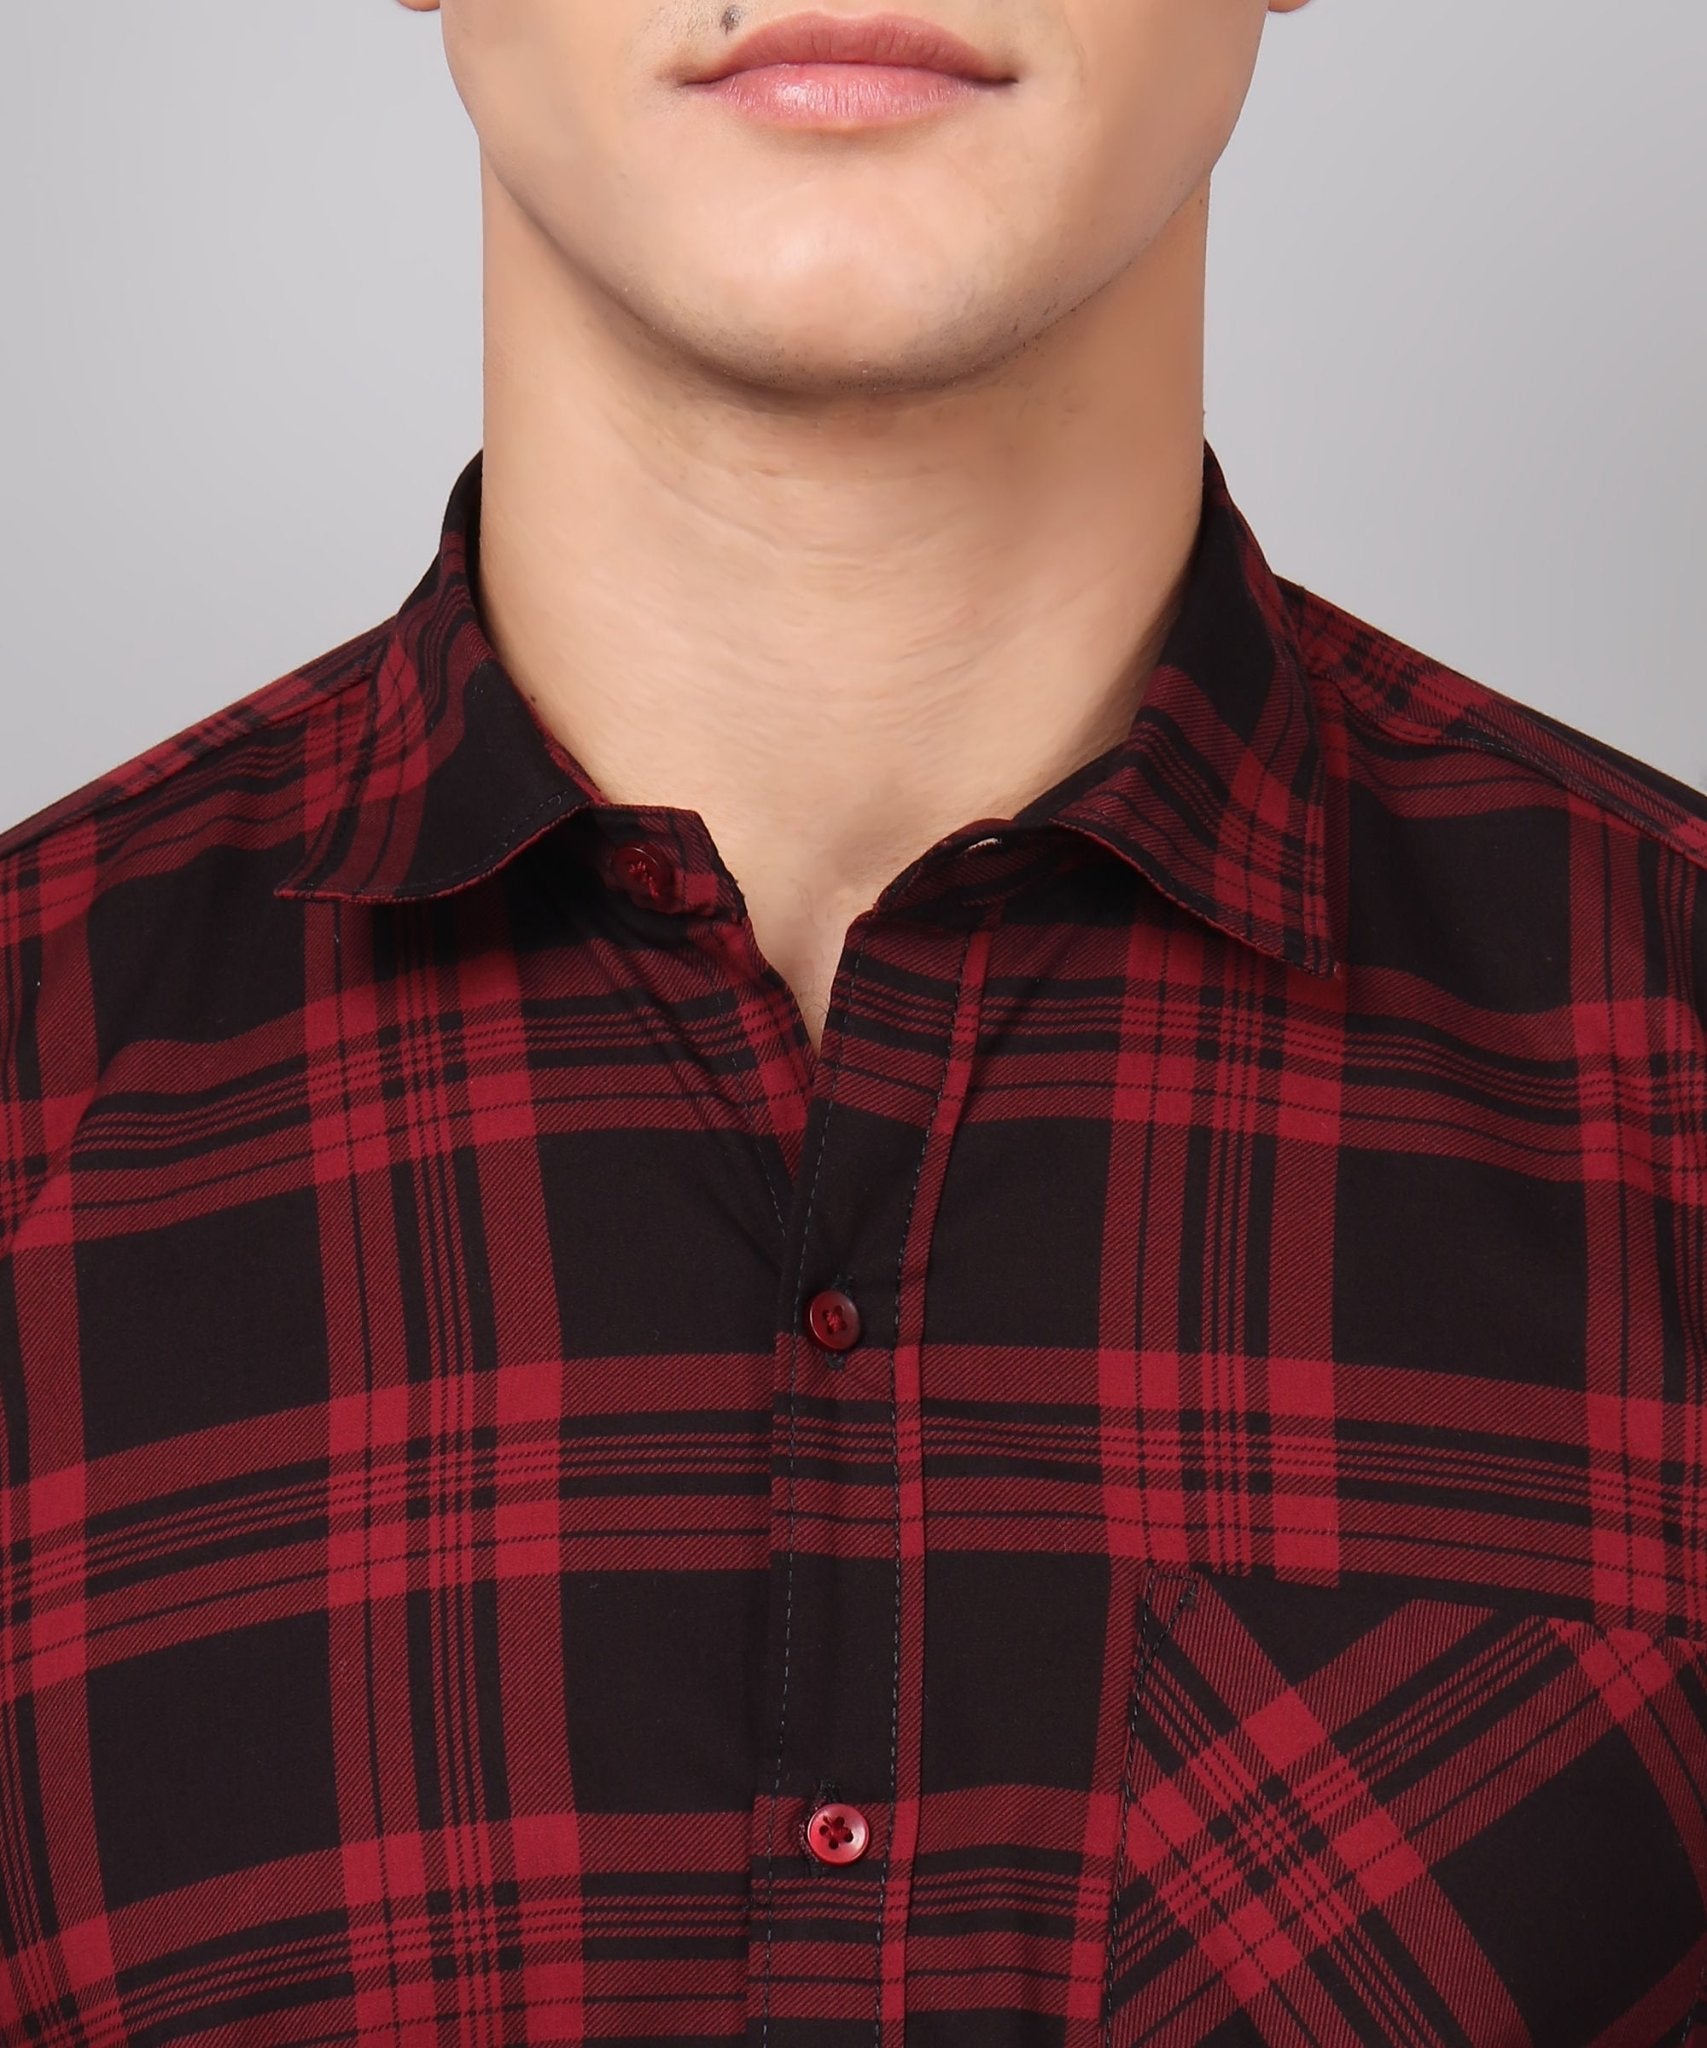 TryBuy Premium Red Black Checks Shirts for Men - TryBuy® USA🇺🇸